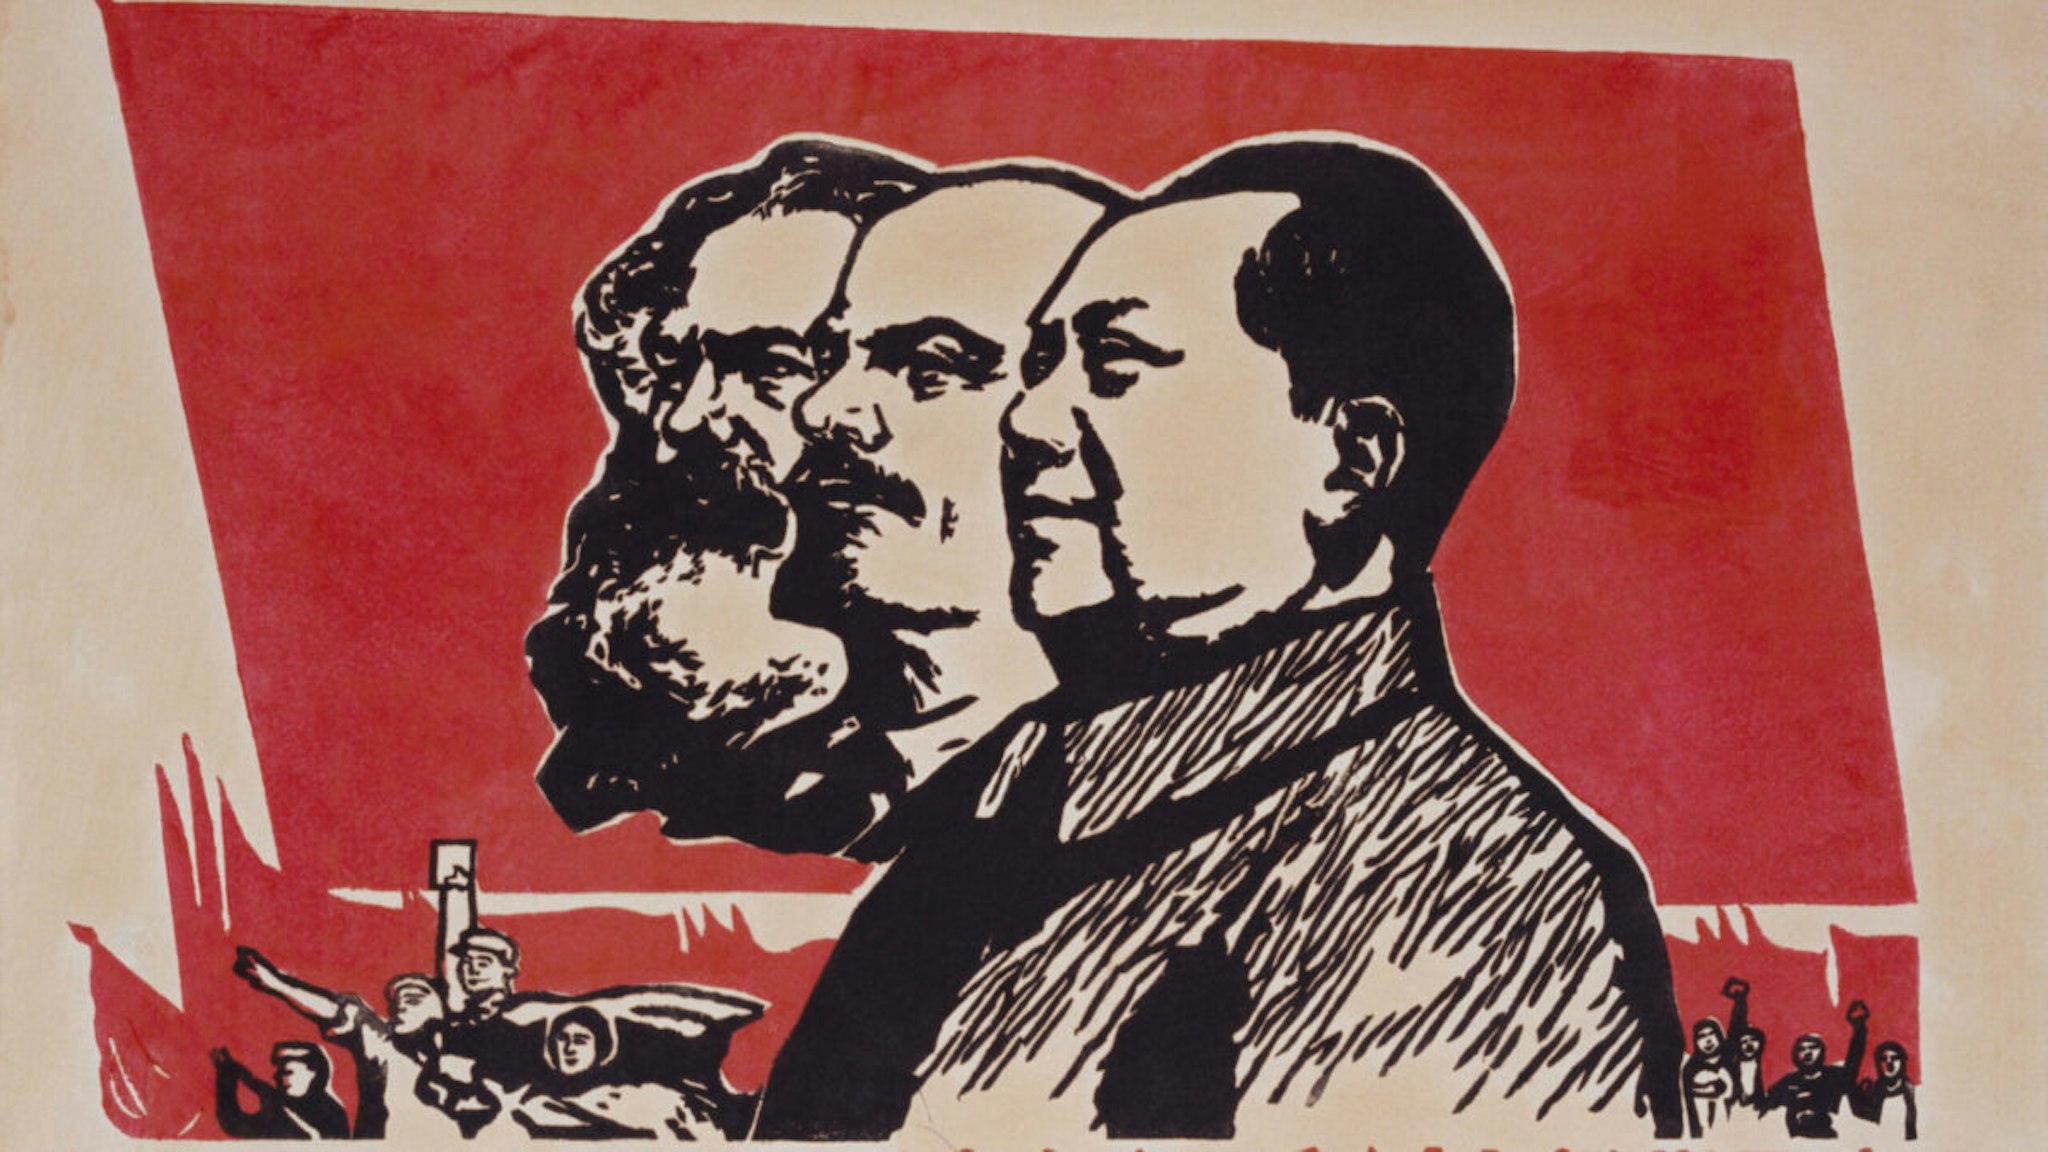 Chinese Communist Poster with Karl Marx, Vladimir Lenin and Mao Zedong, twentieth century.